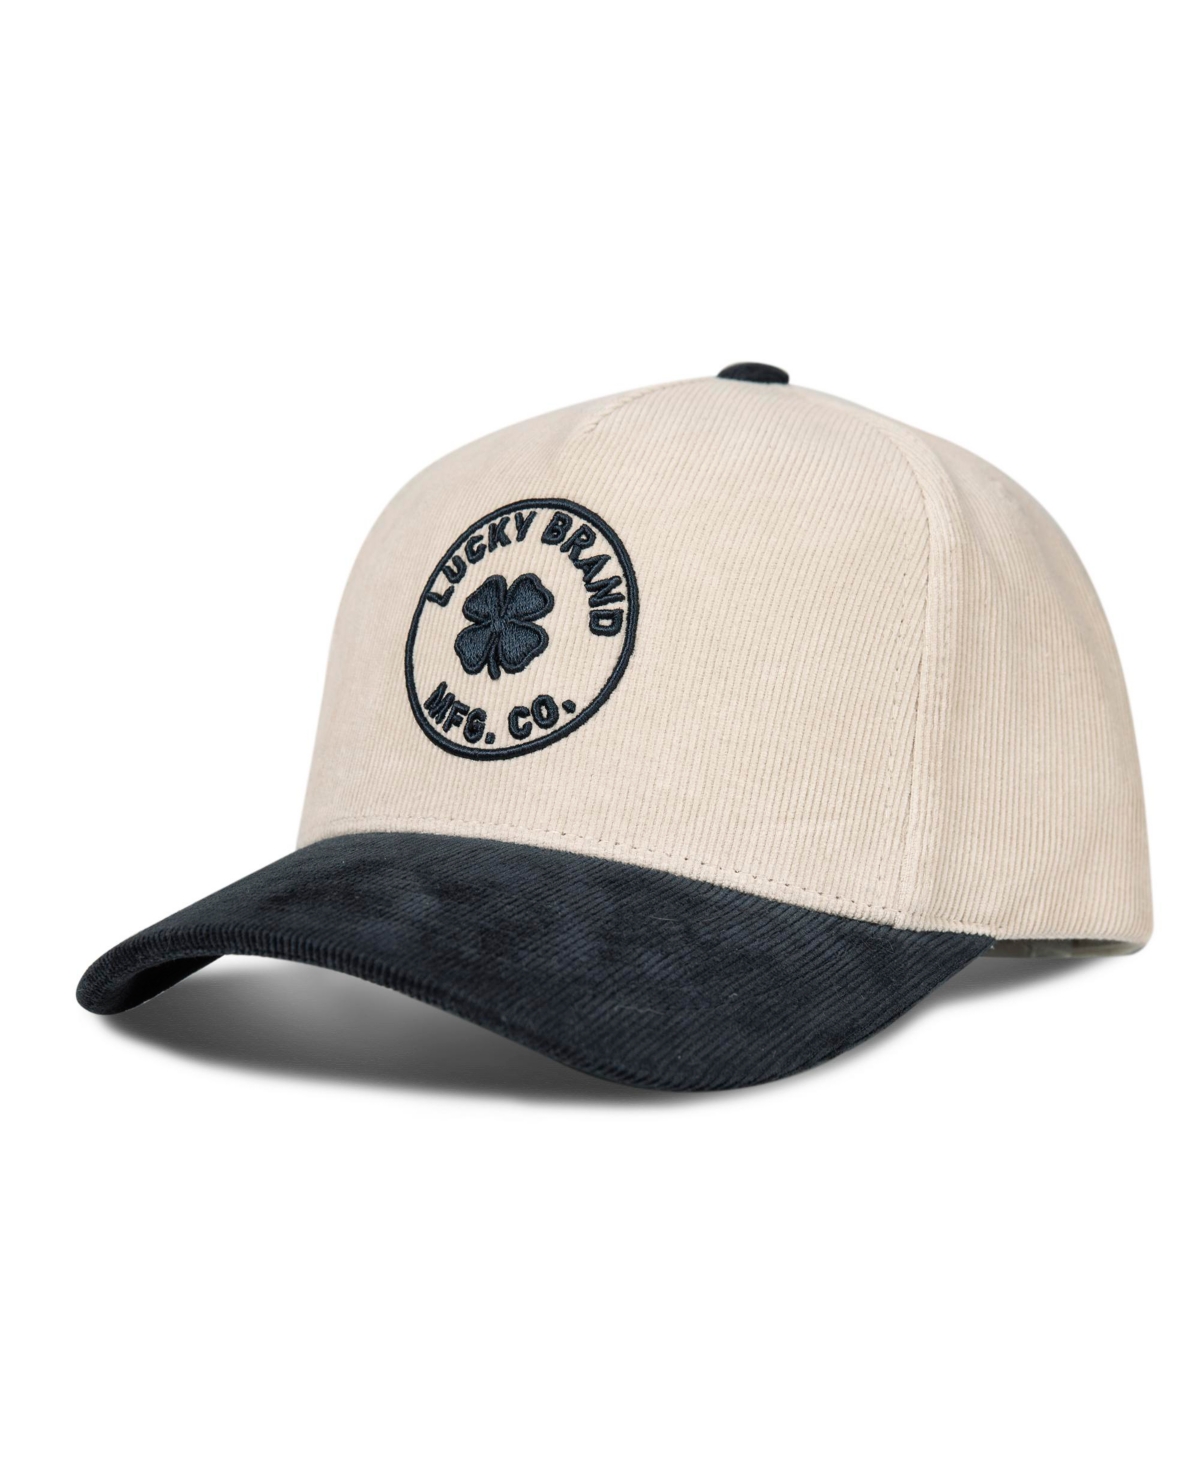 Women's Mfg Embr. Cord Hat - Cream